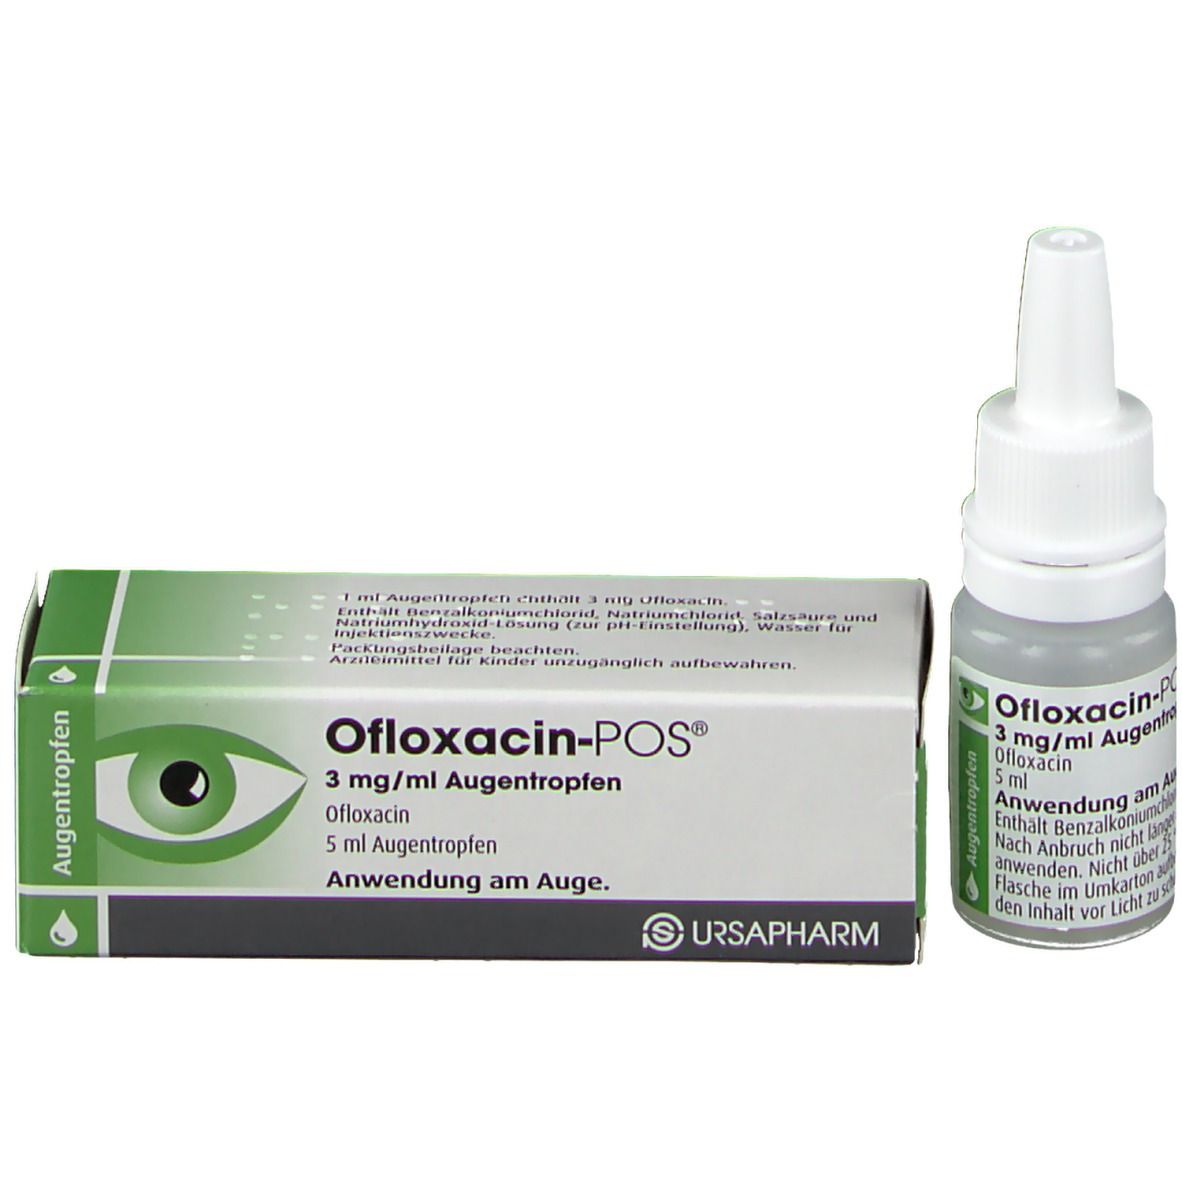 Ofloxacin-POS® 3 mg/ml